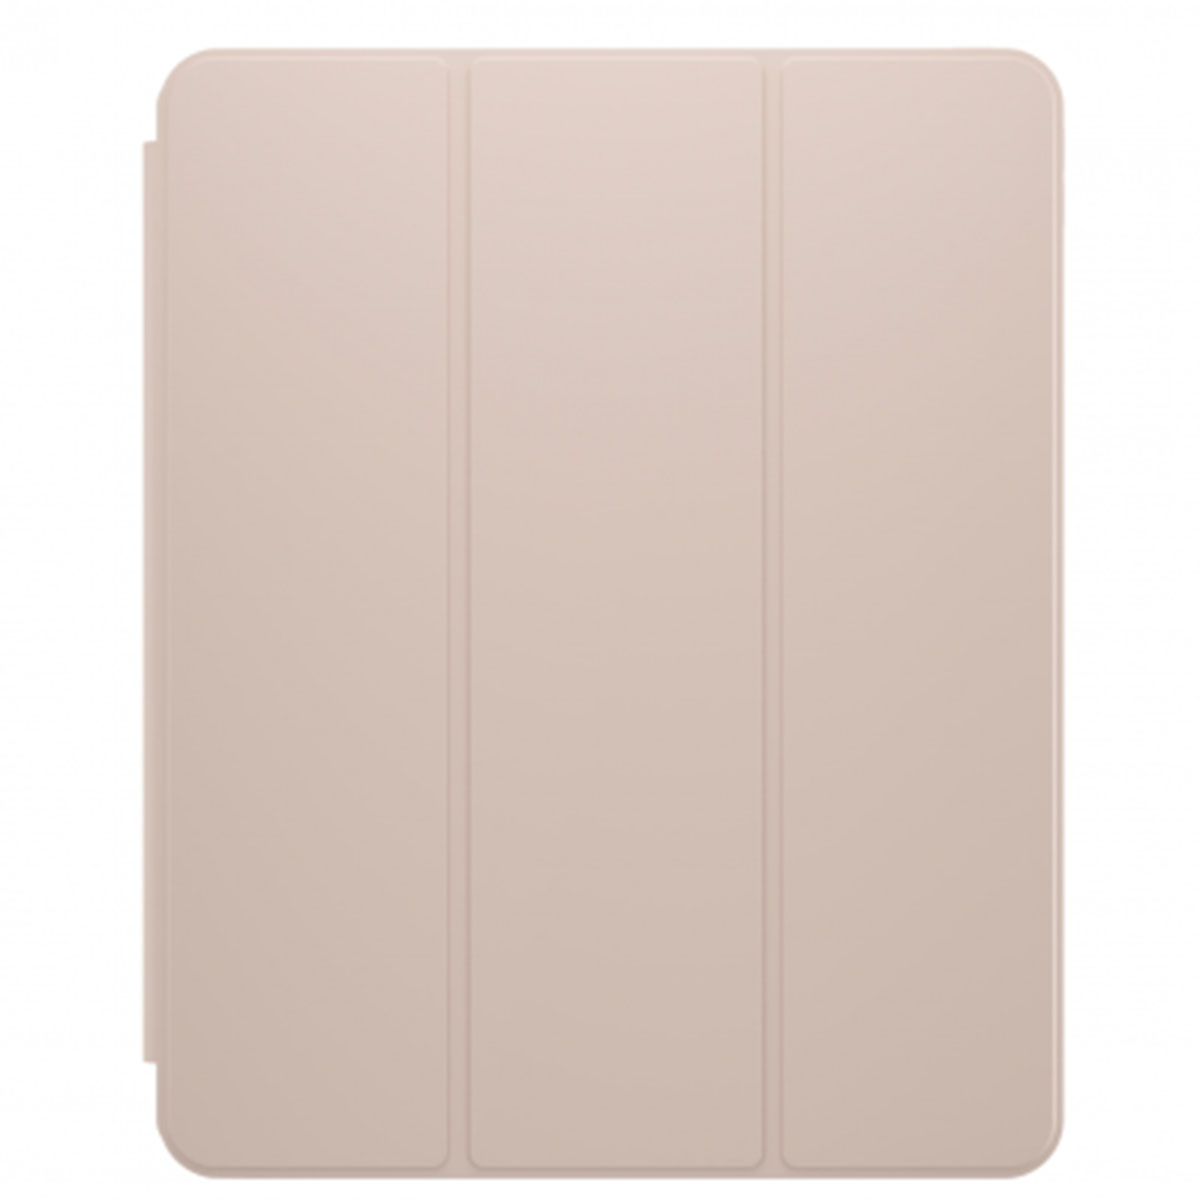 Resigilat – Husa de protectie tableta Next One pentru Apple iPad 12.9 inch, Suport Pen, Protectie 360, Plastic si microfiba interior, Ballet Pink [RESIGILAT]